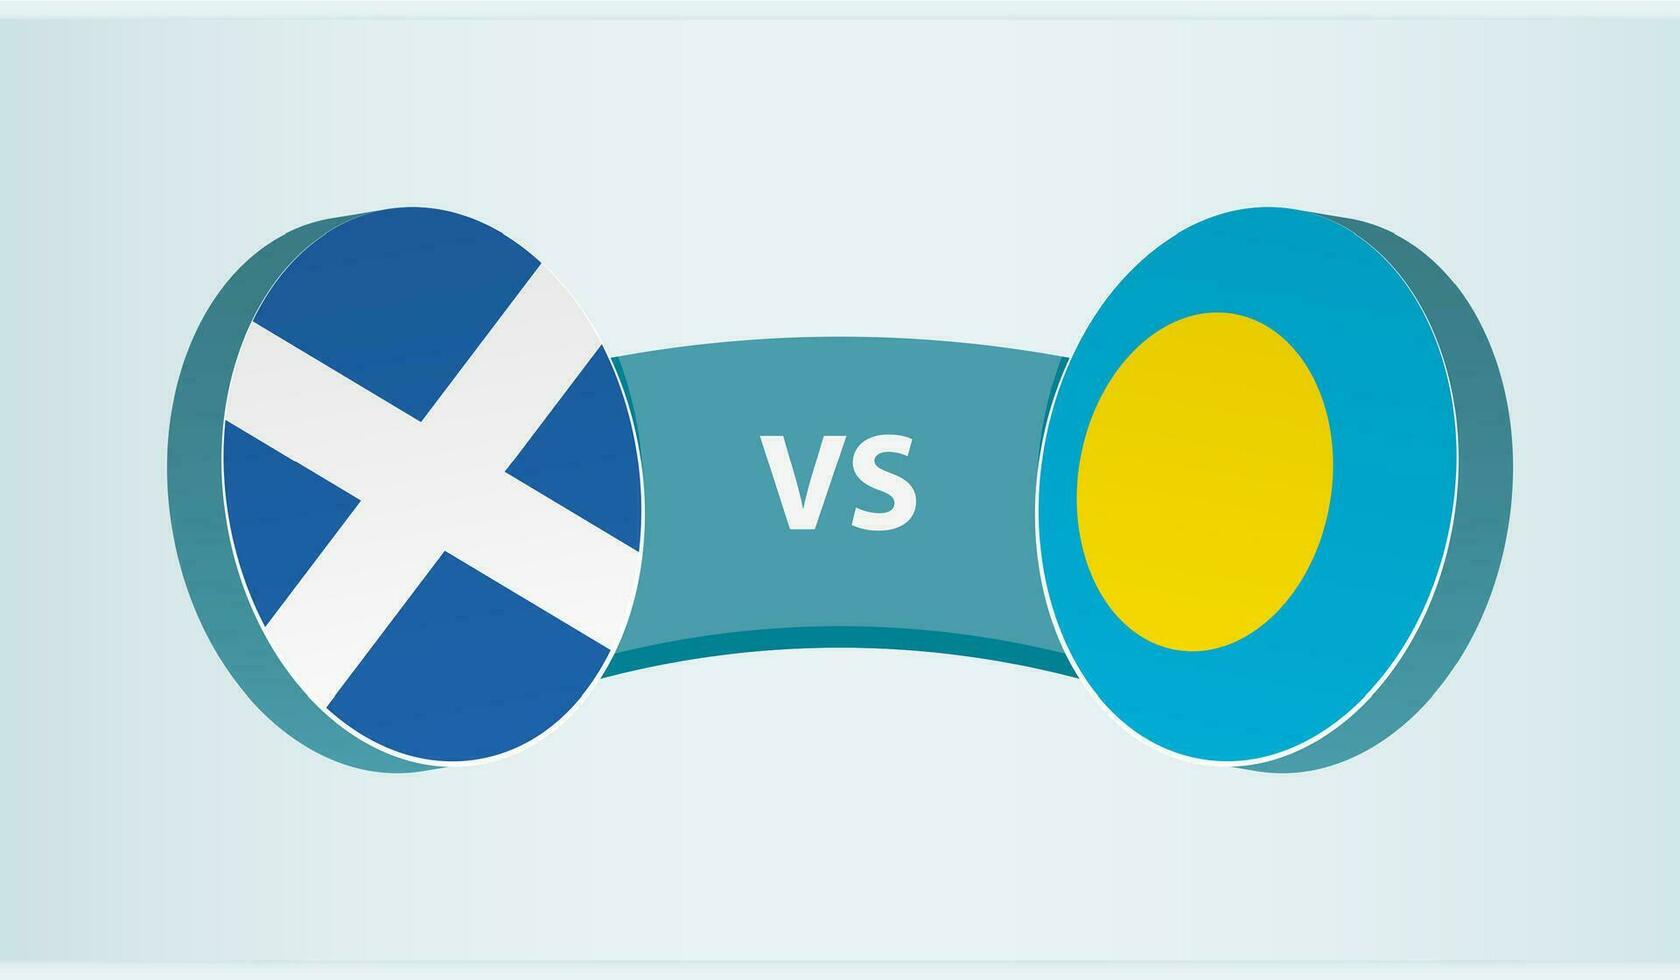 Scotland versus Palau, team sports competition concept. vector